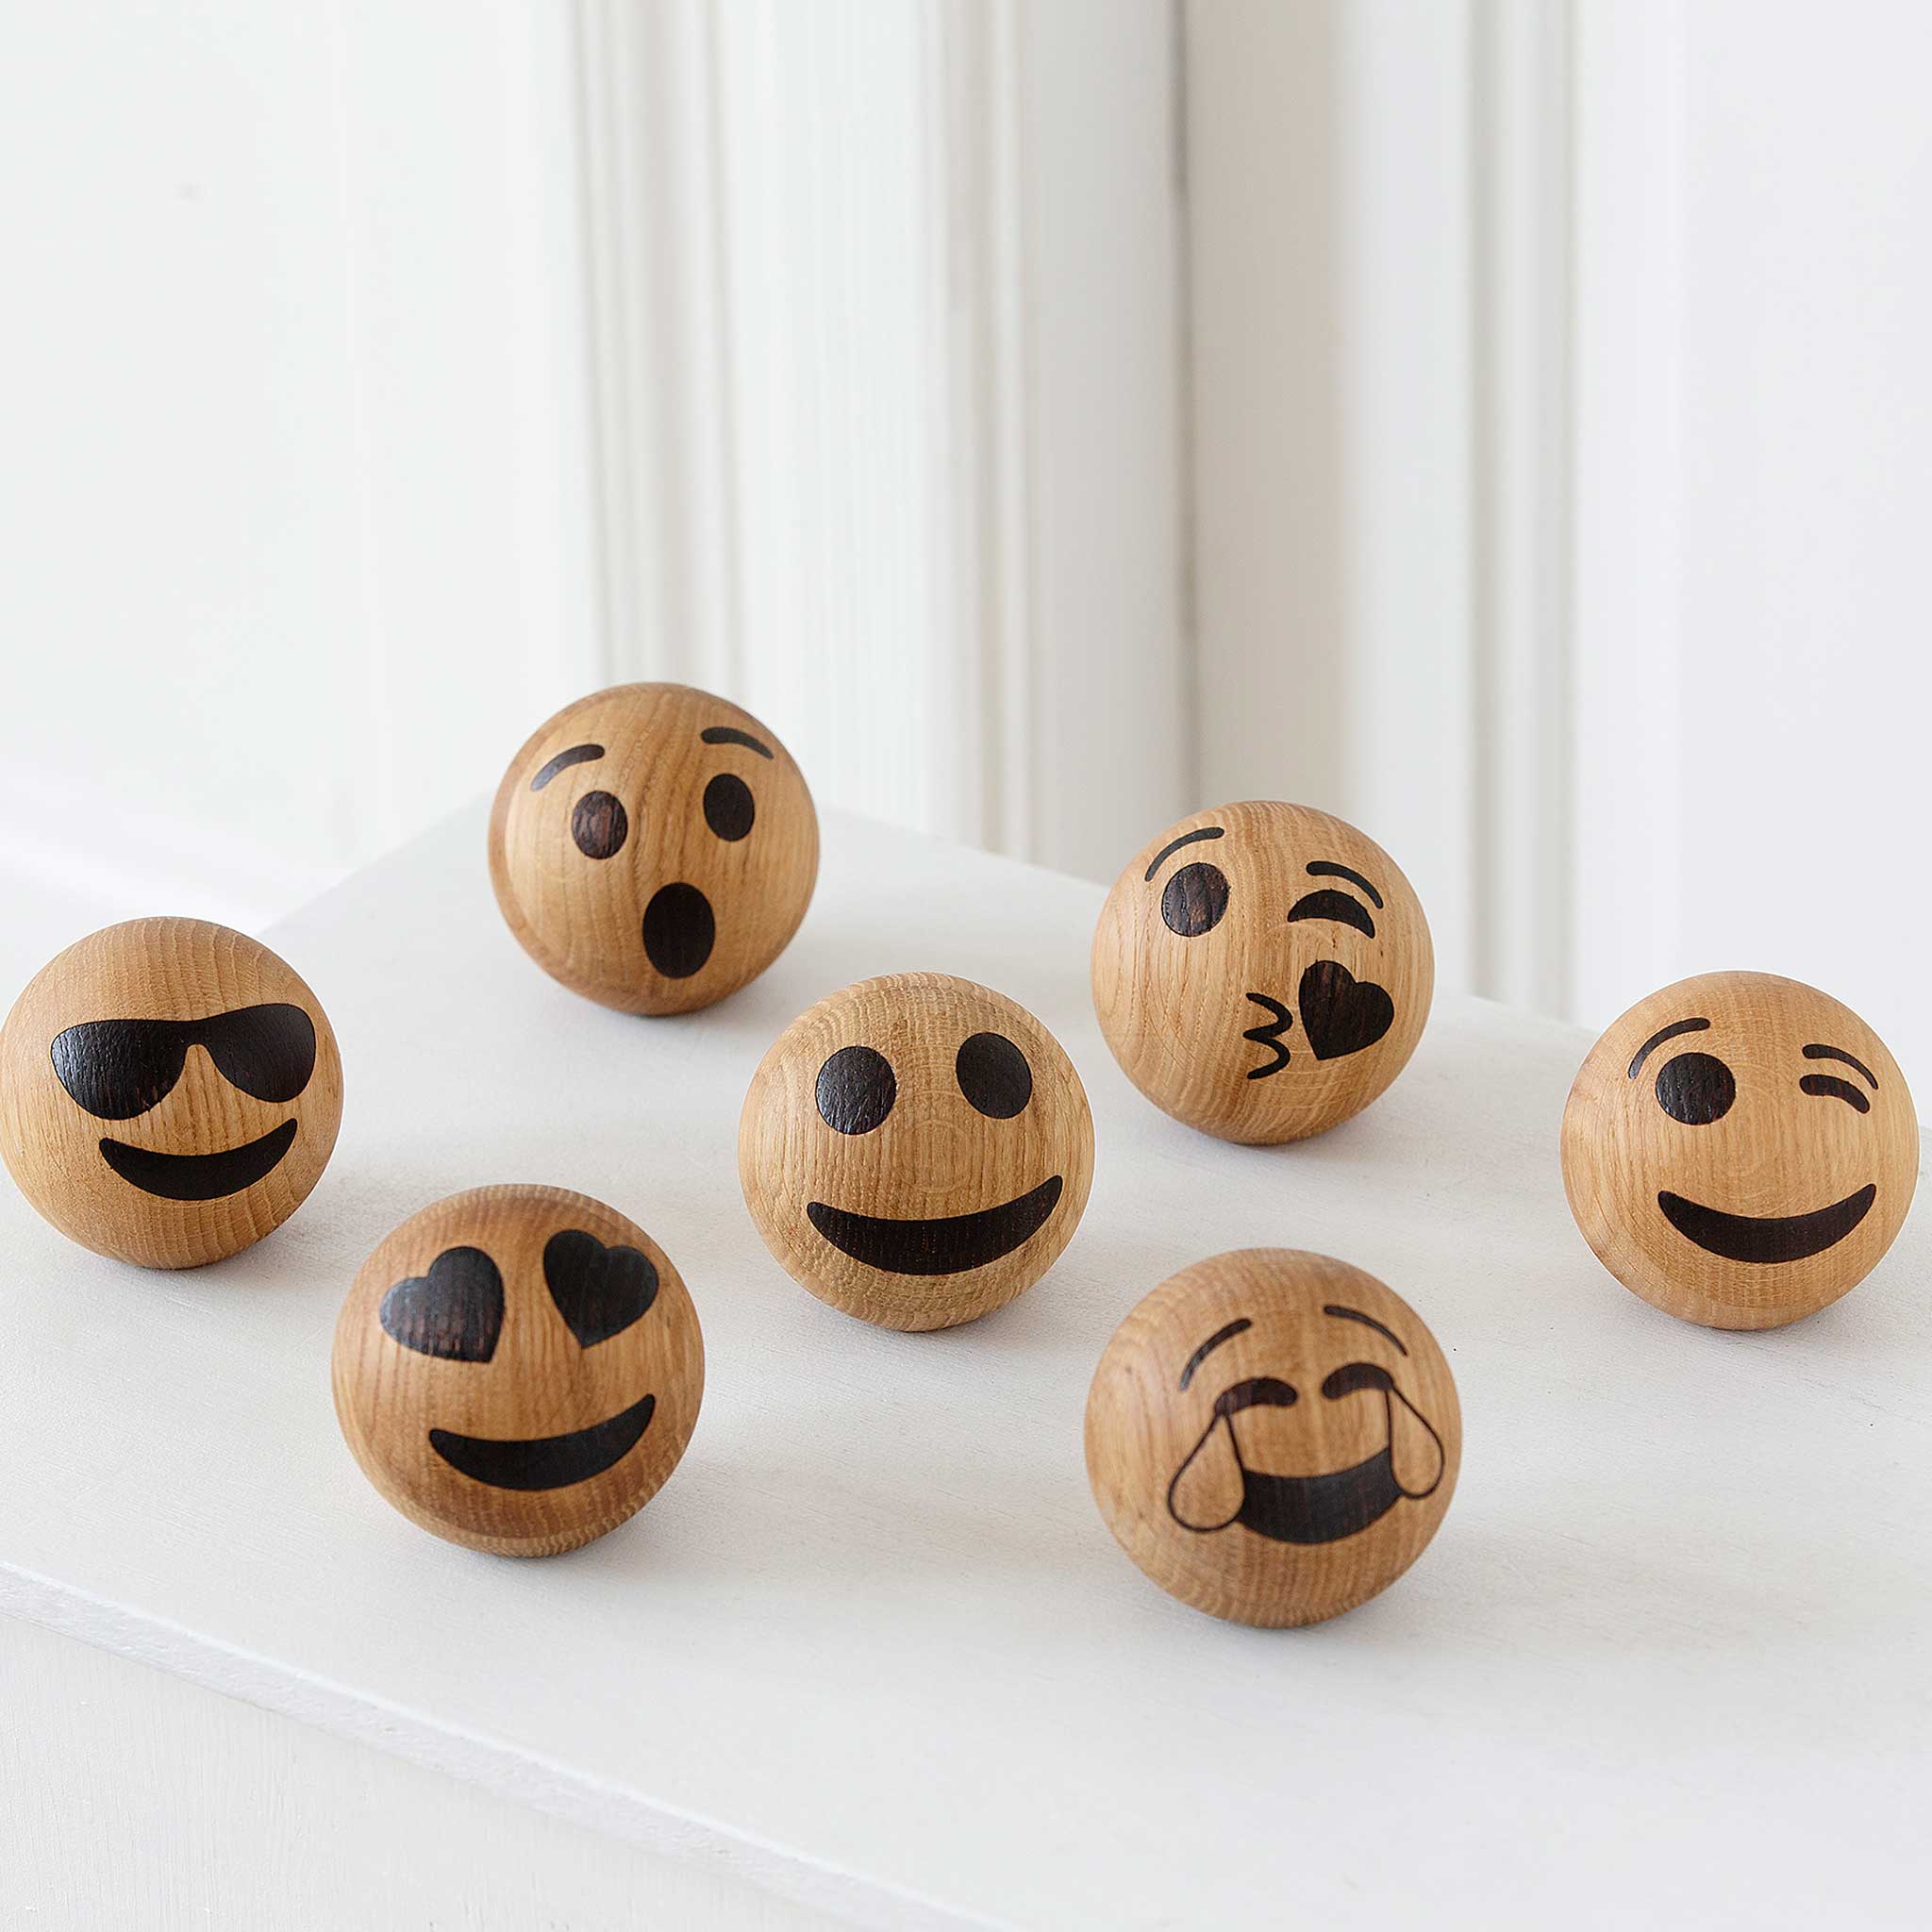 SPRING EMOTIONS | Trauriges Gesicht | Holz EMOTICONS | mencke&vagnby | Spring Copenhagen - Charles & Marie